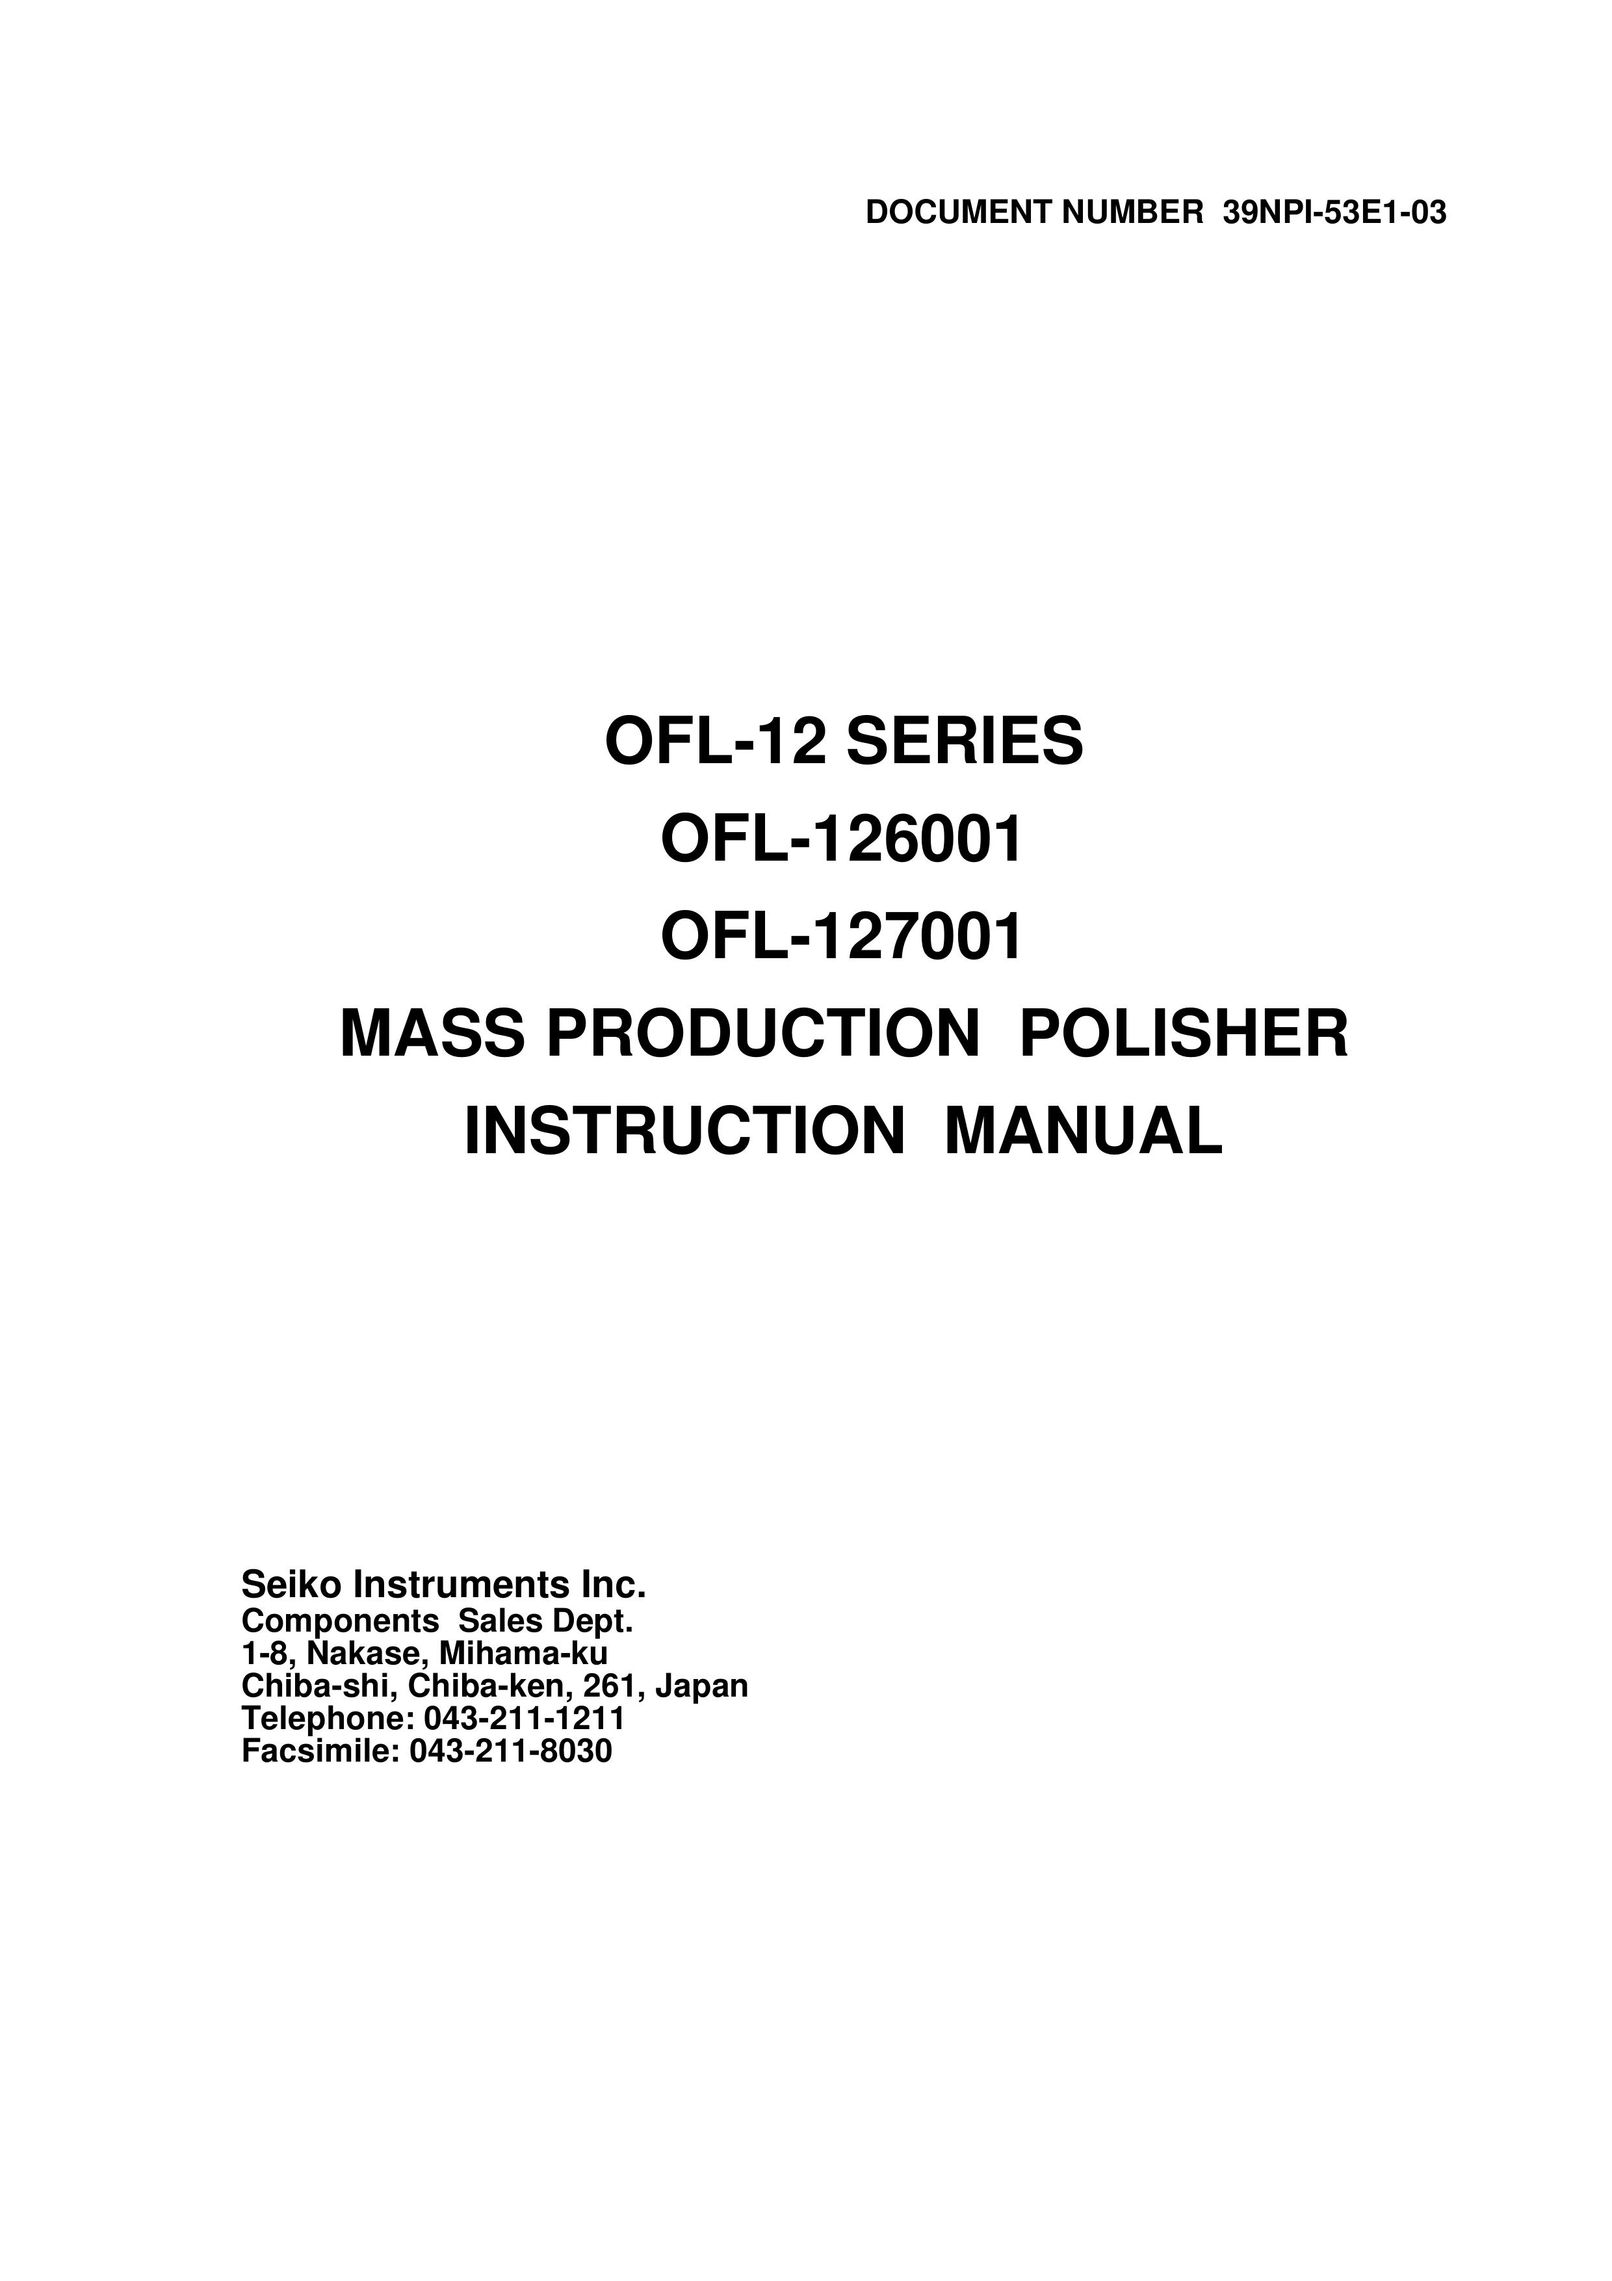 Seiko Group OFL-12 SERIES Sander User Manual